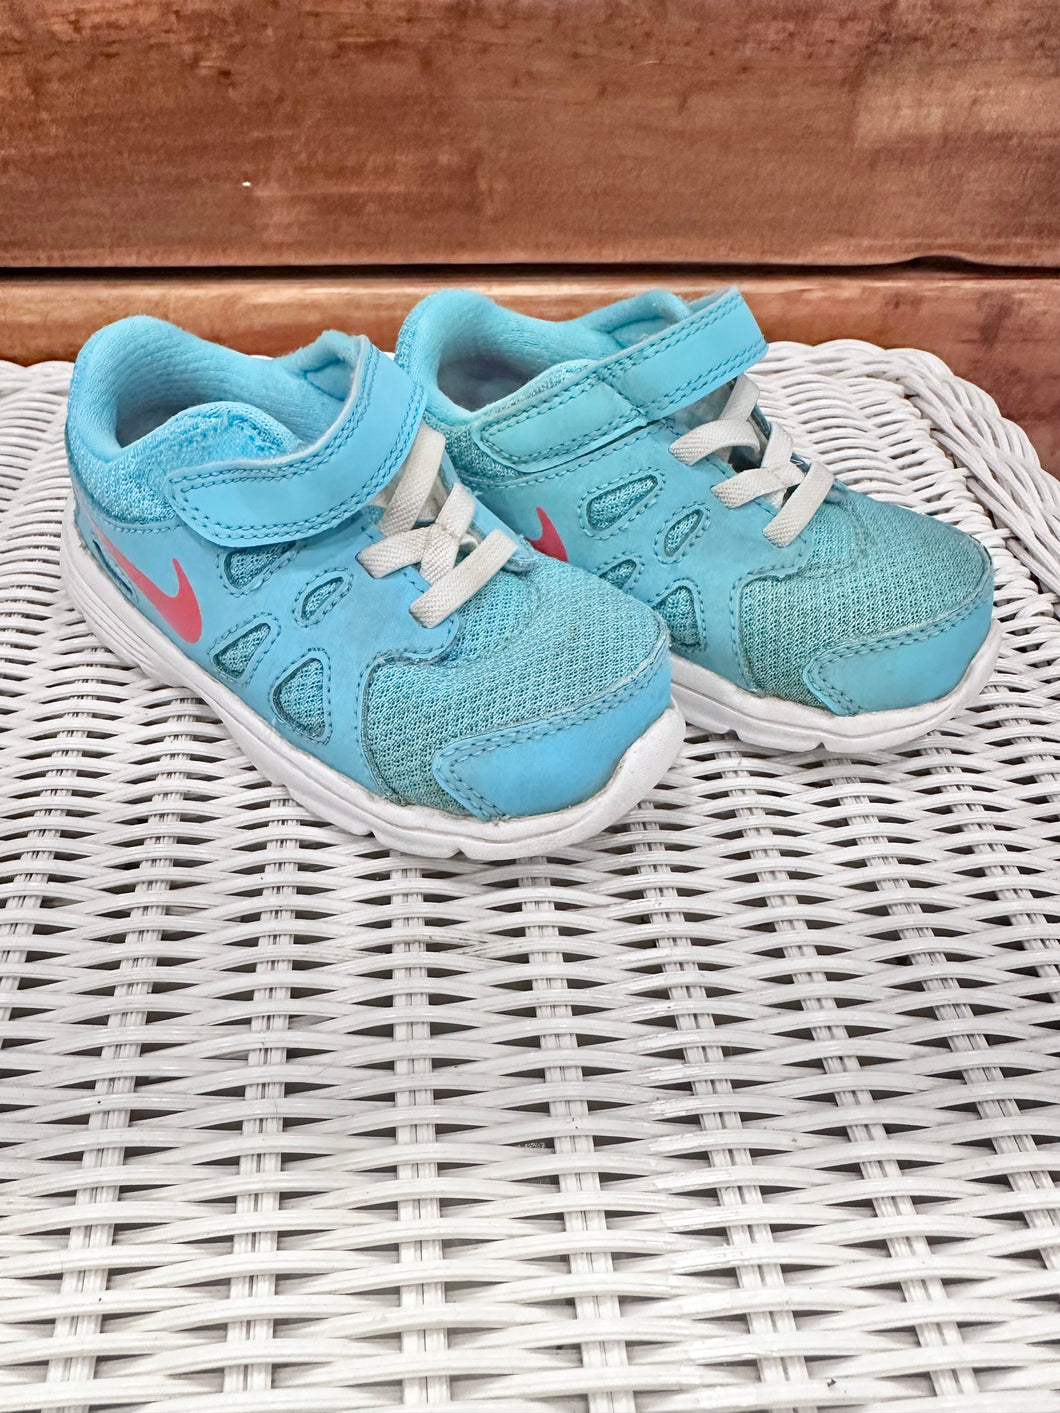 Nike Blue Tennis Shoes Size 4C*